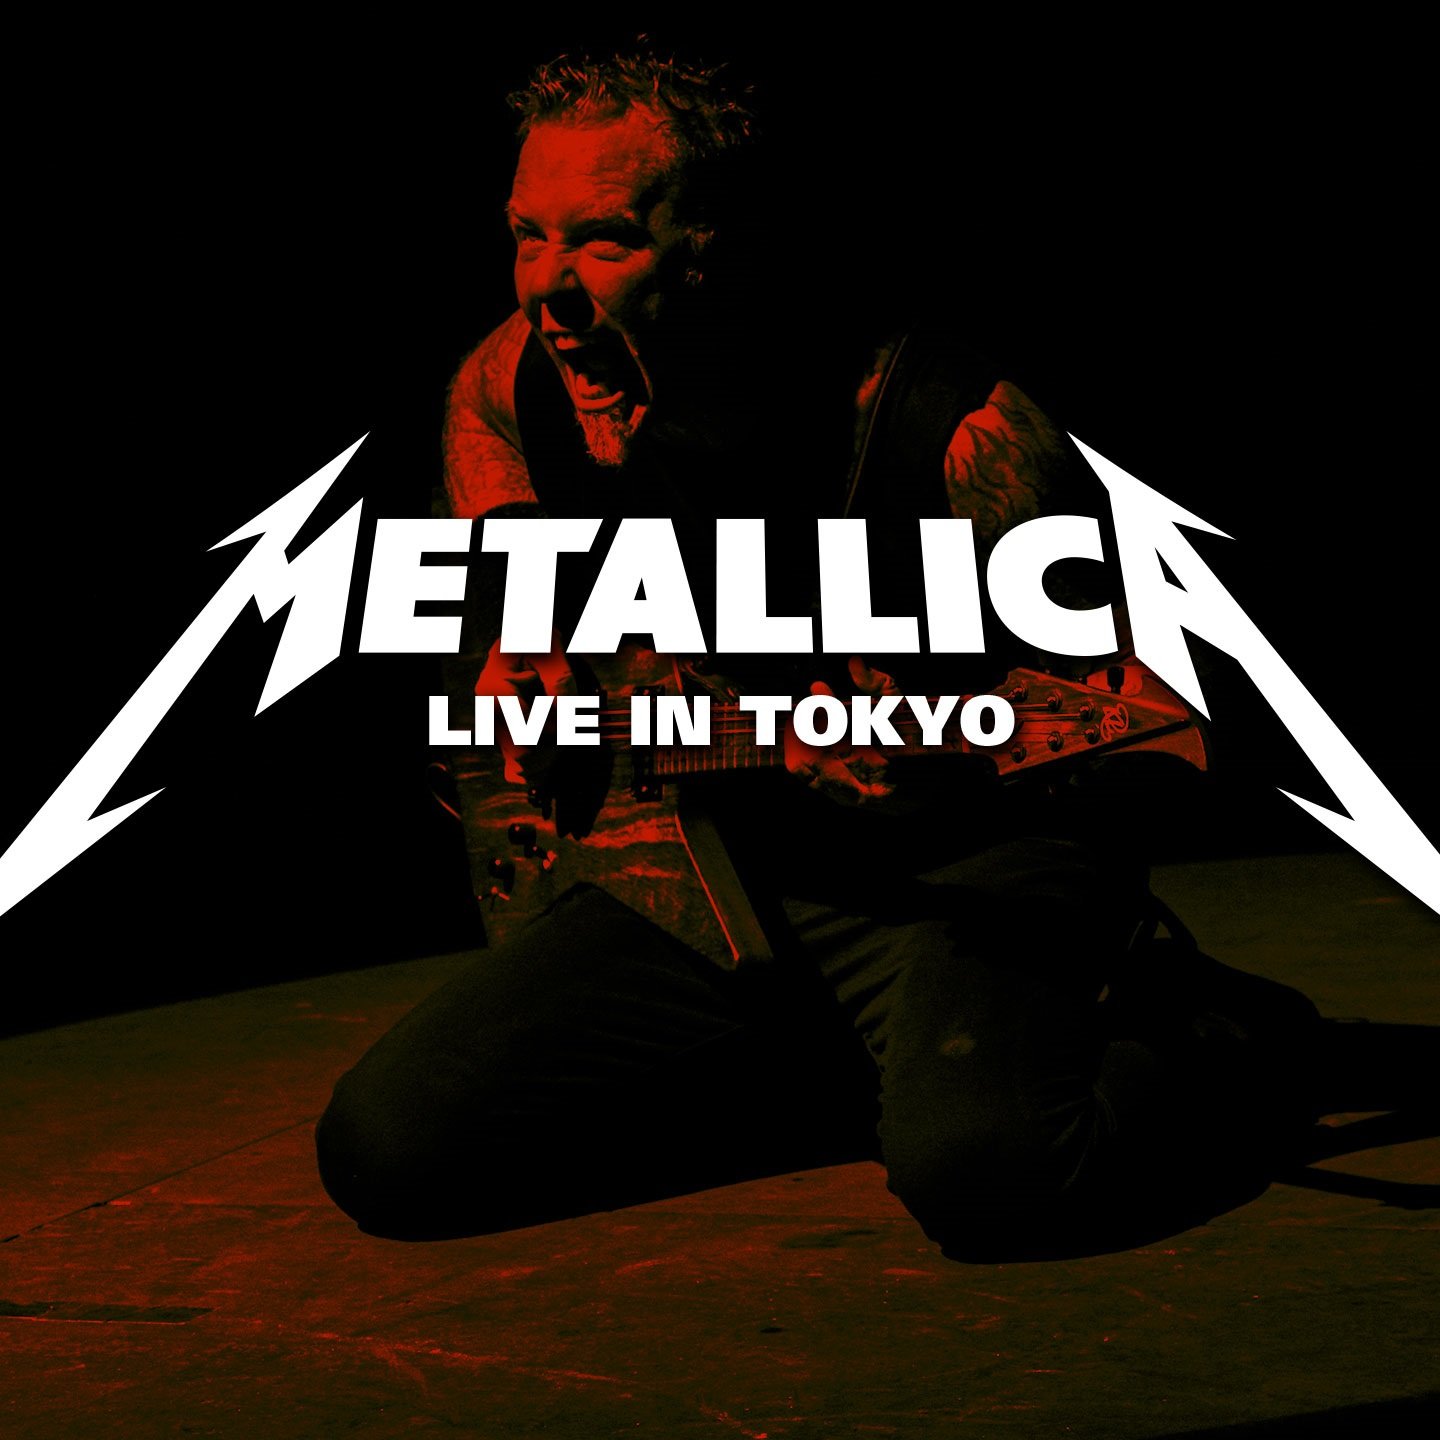 Metallica flac. Металлика Live. Metallica Live 2013. Seek and destroy Metallica альбом. Металлика ласт альбом.